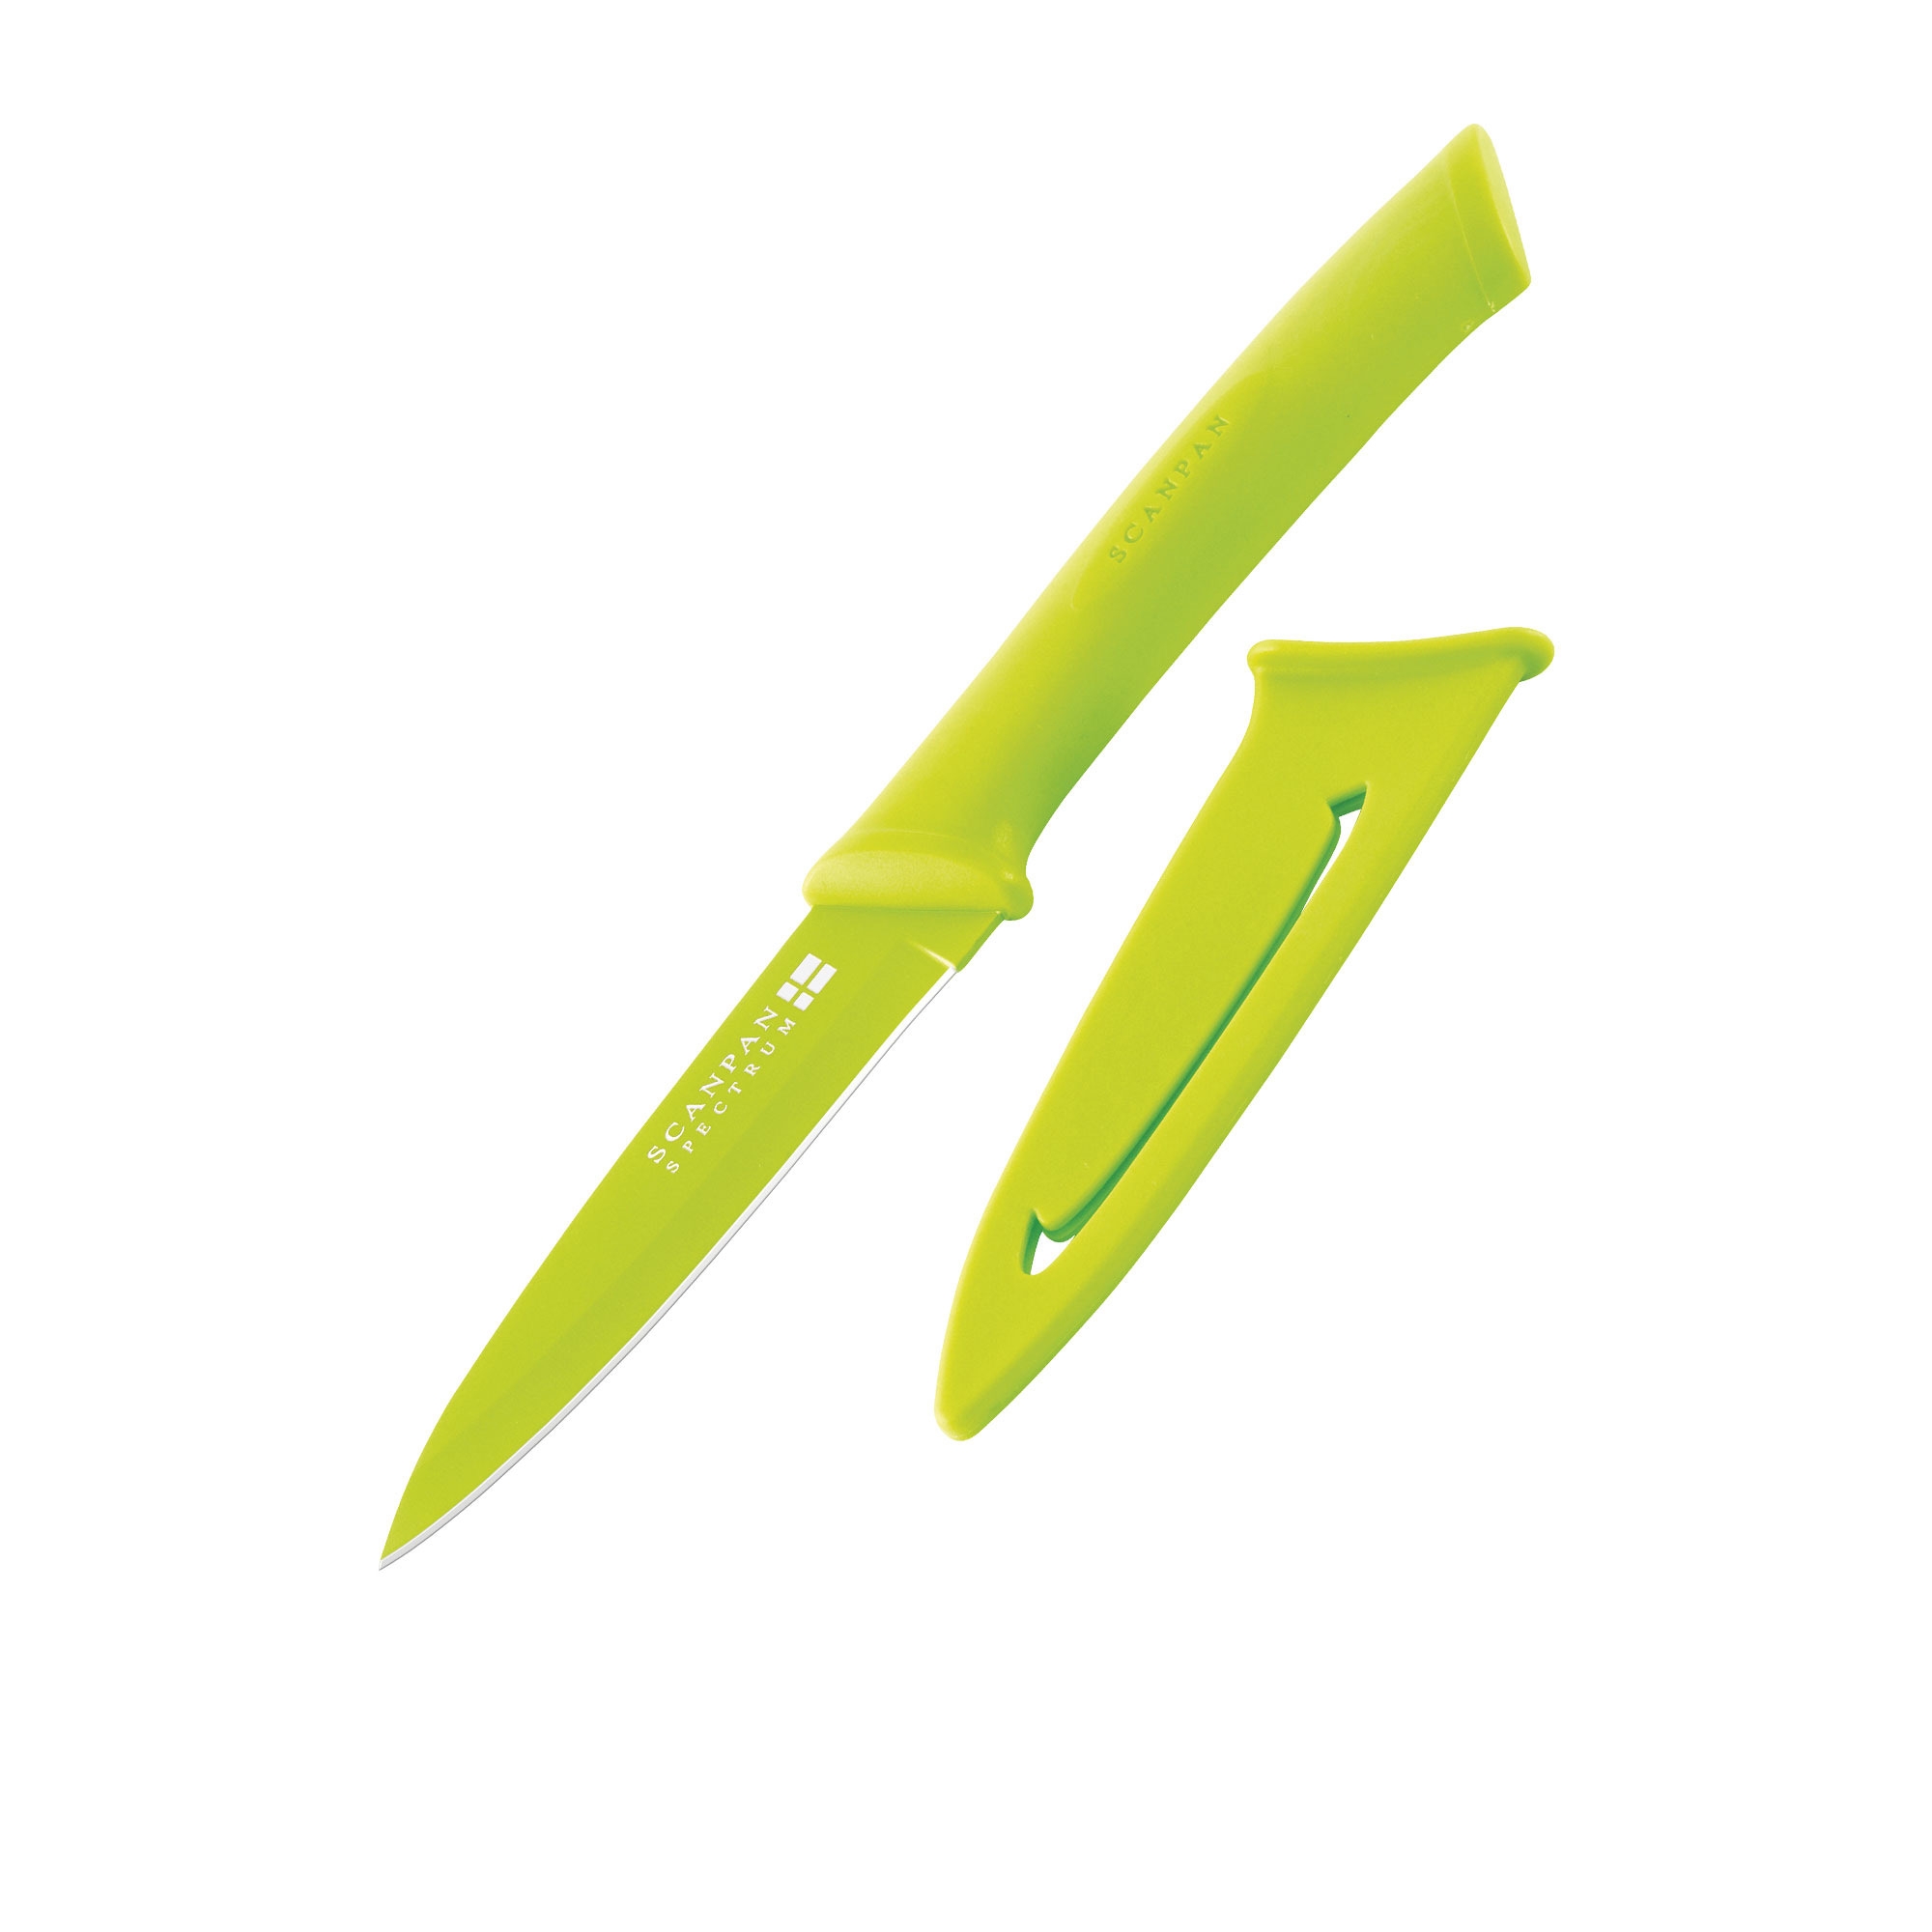 Scanpan Spectrum Soft Touch Utility Knife 9.5cm Green Image 1